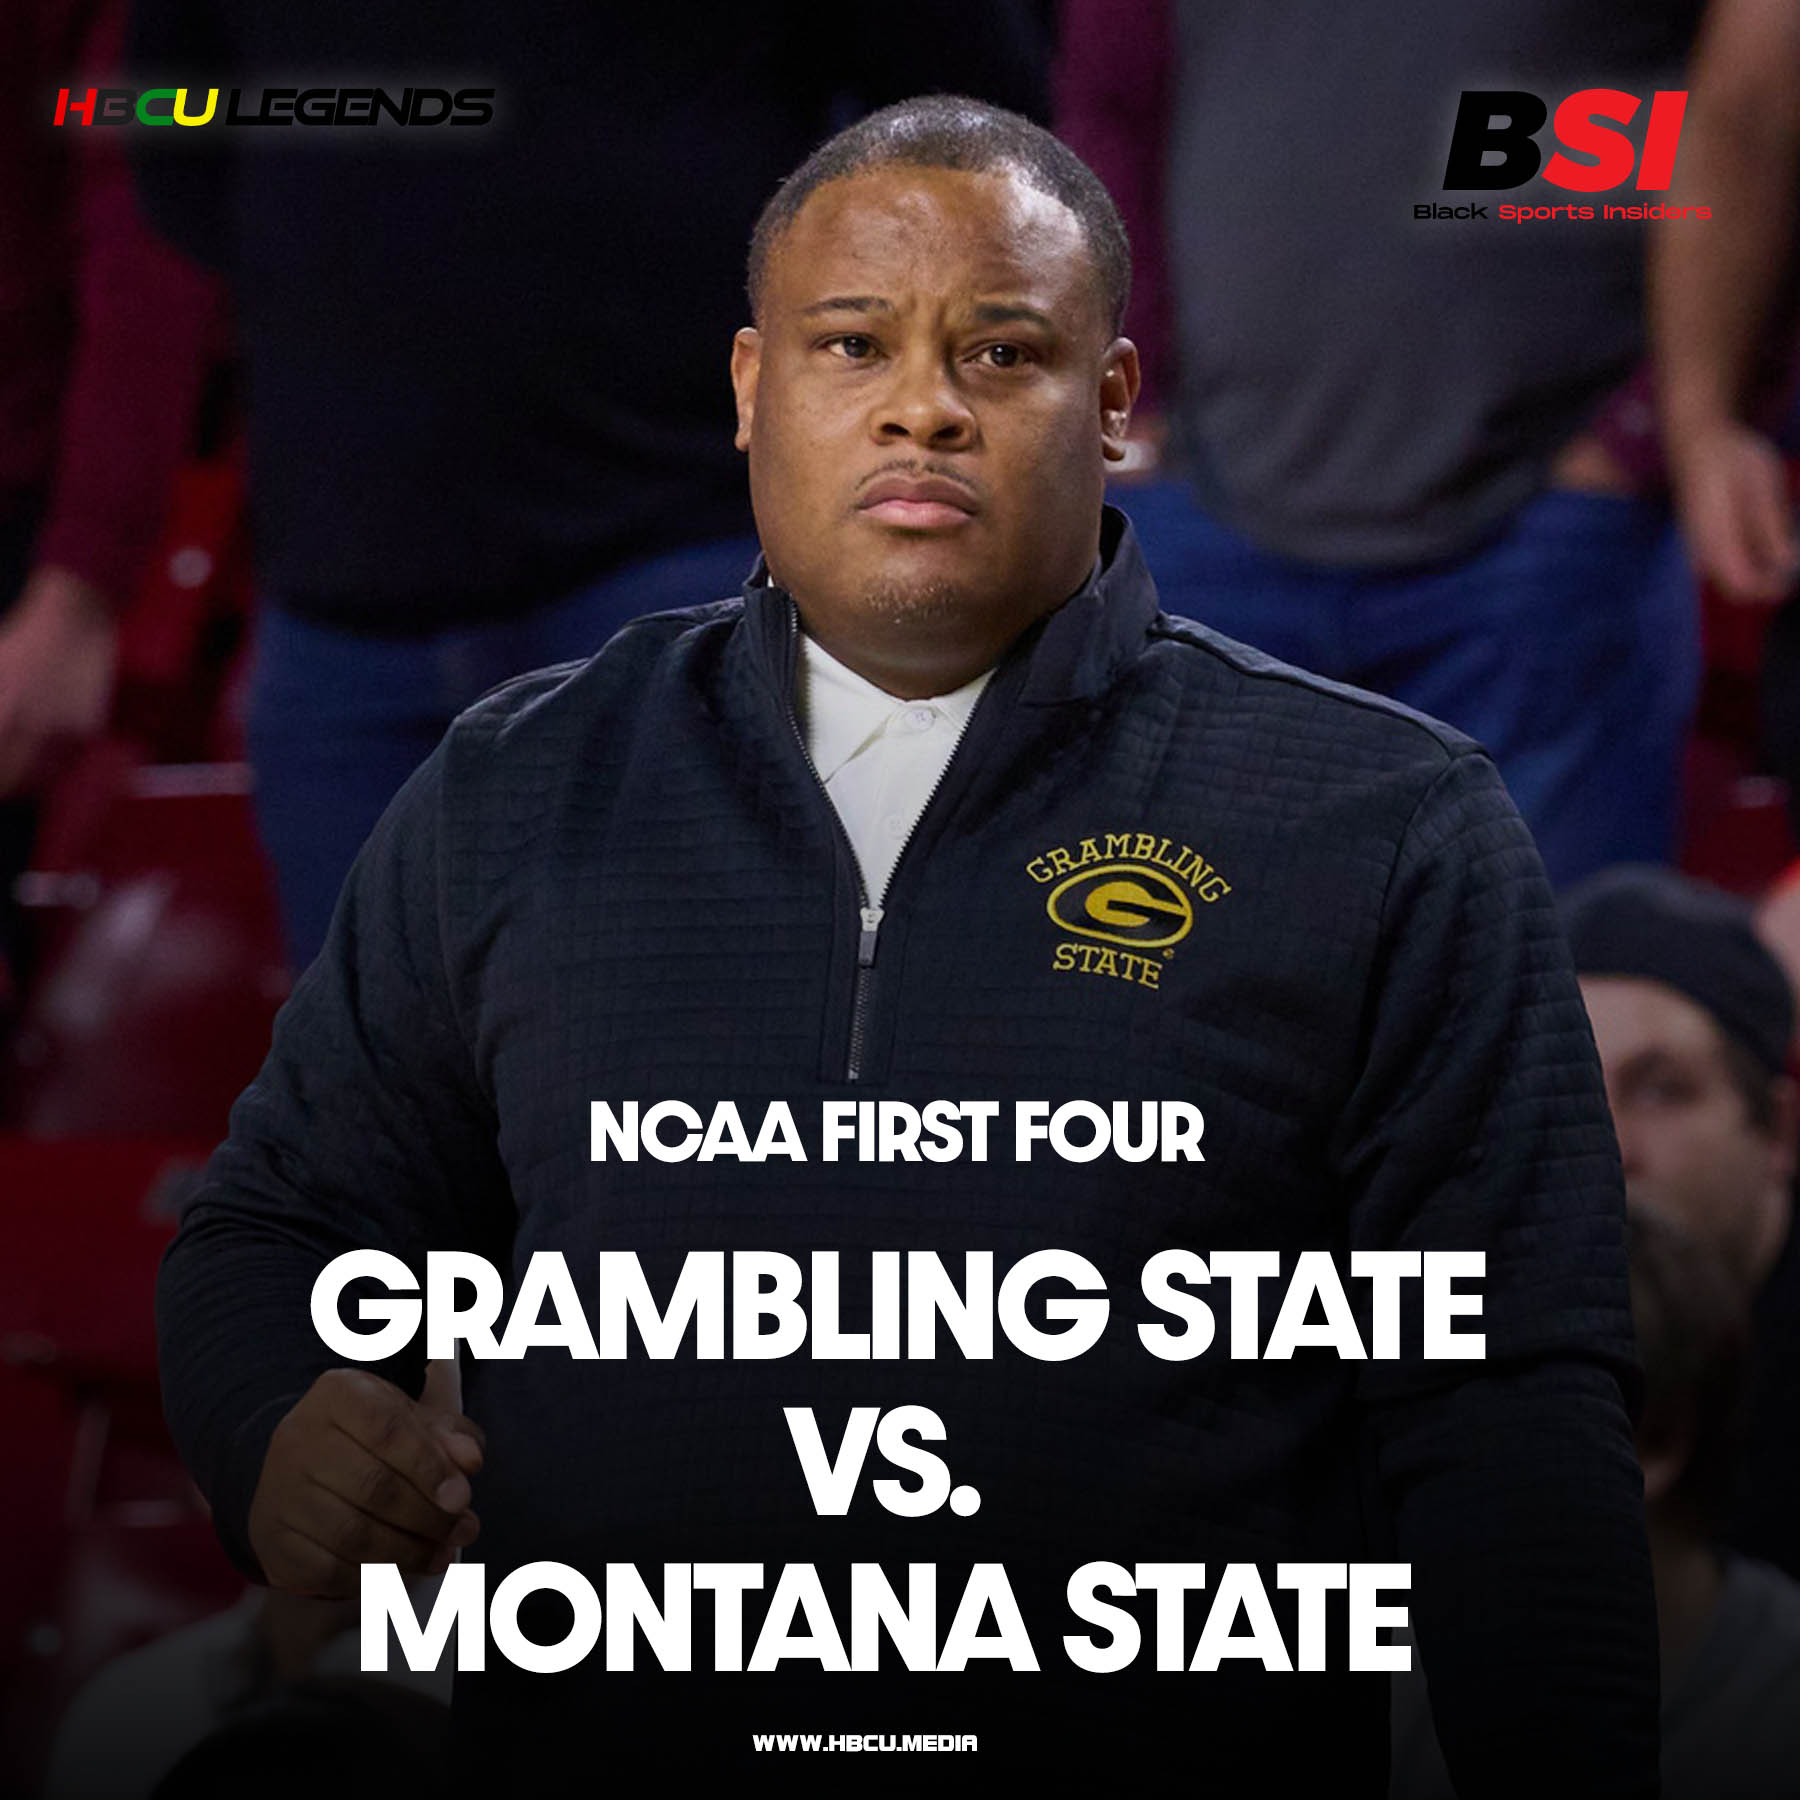 Grambling State vs Montana State